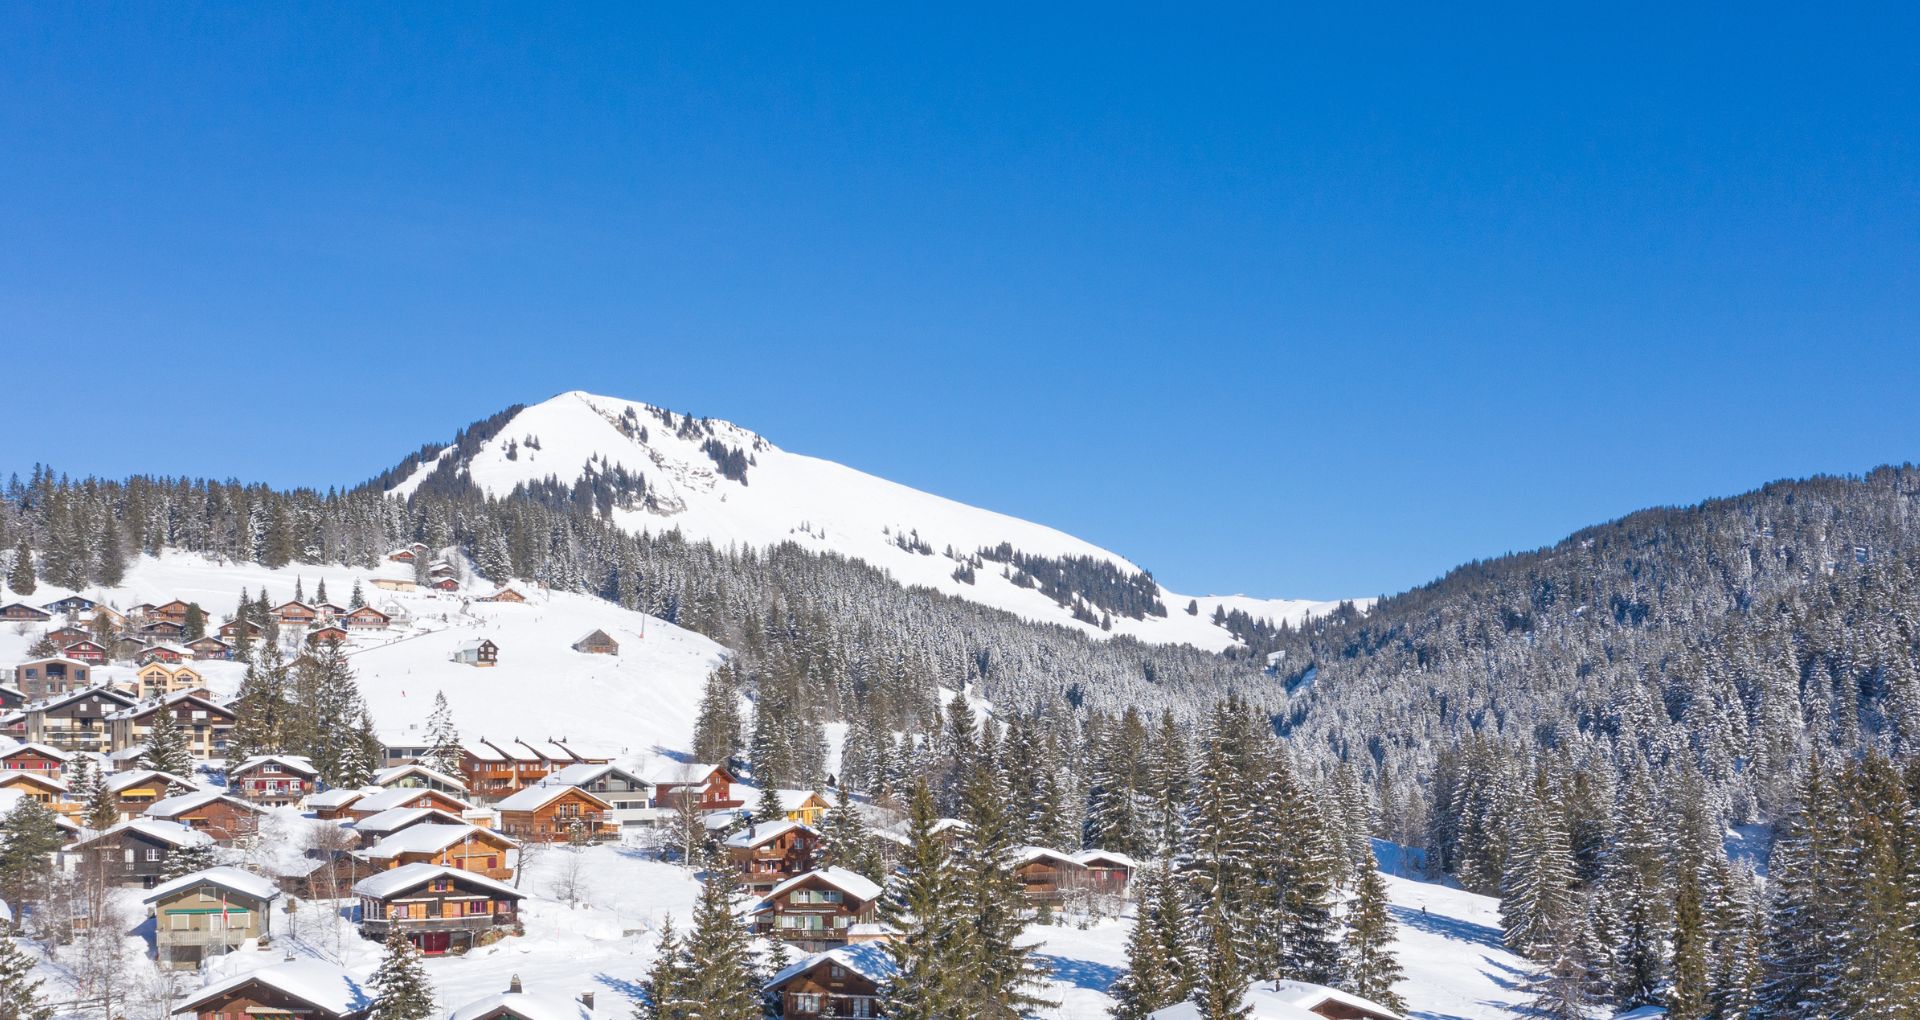 A snowy ski holiday resort